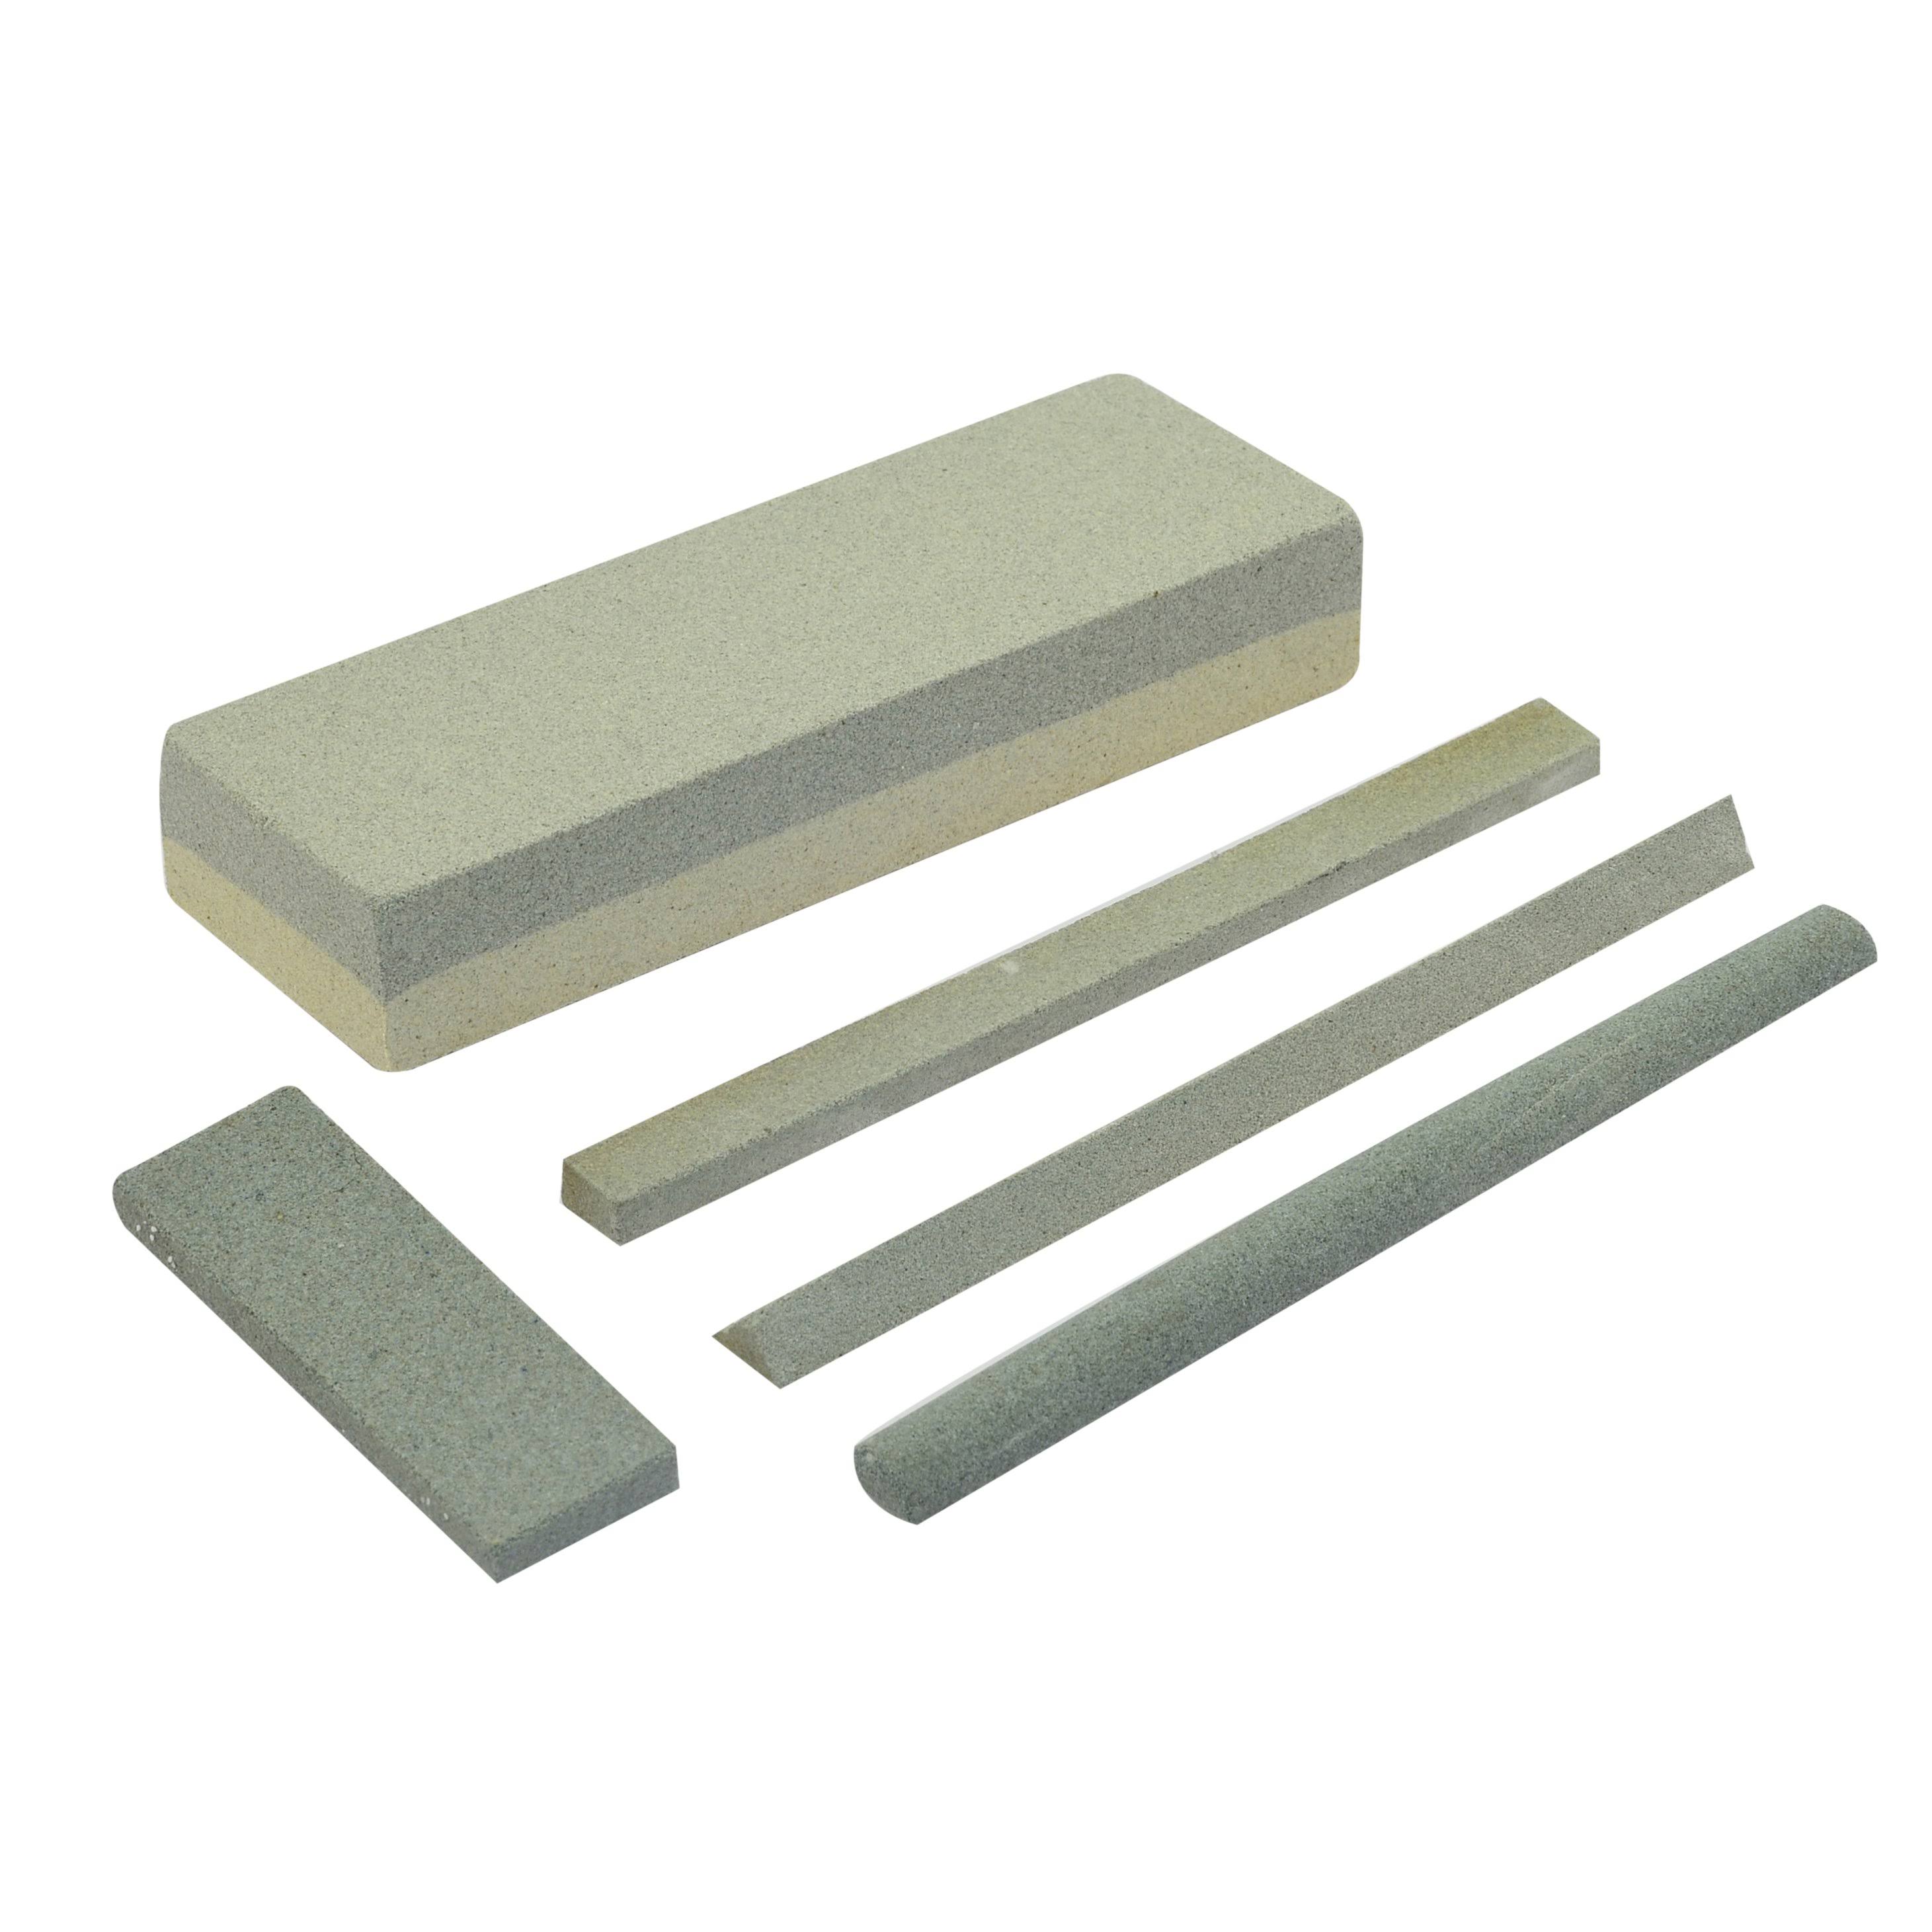 rolson - Sharpening stone set - 5 pieces